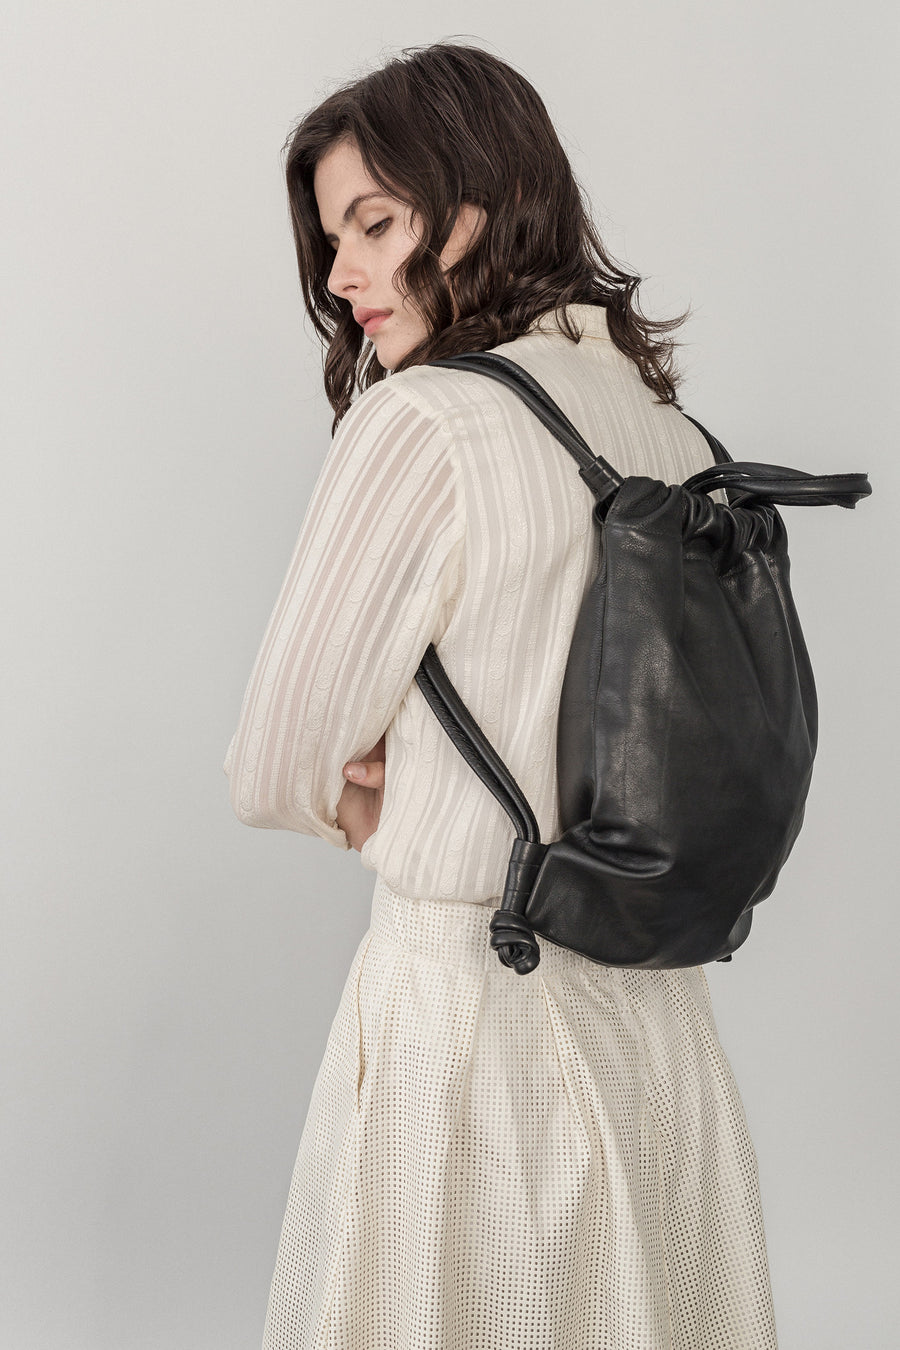 Black Leather Drawstring Backpack